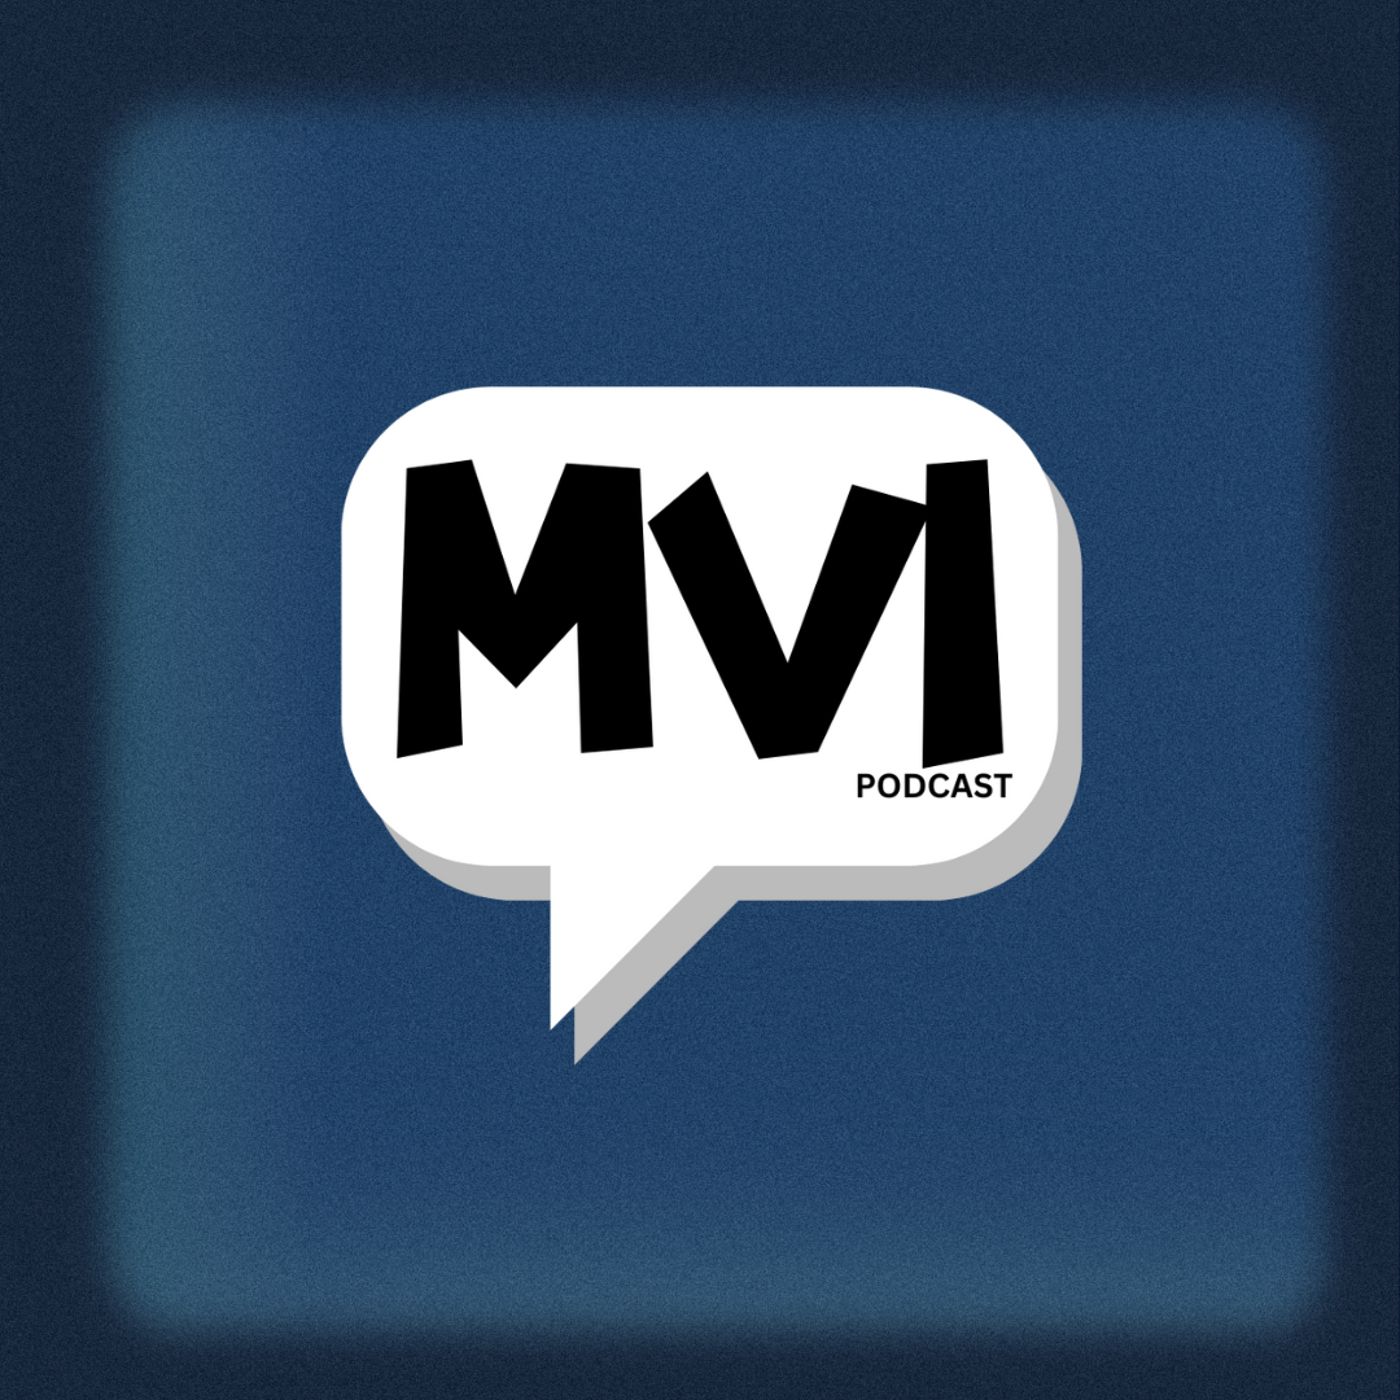 MviPodcast Image